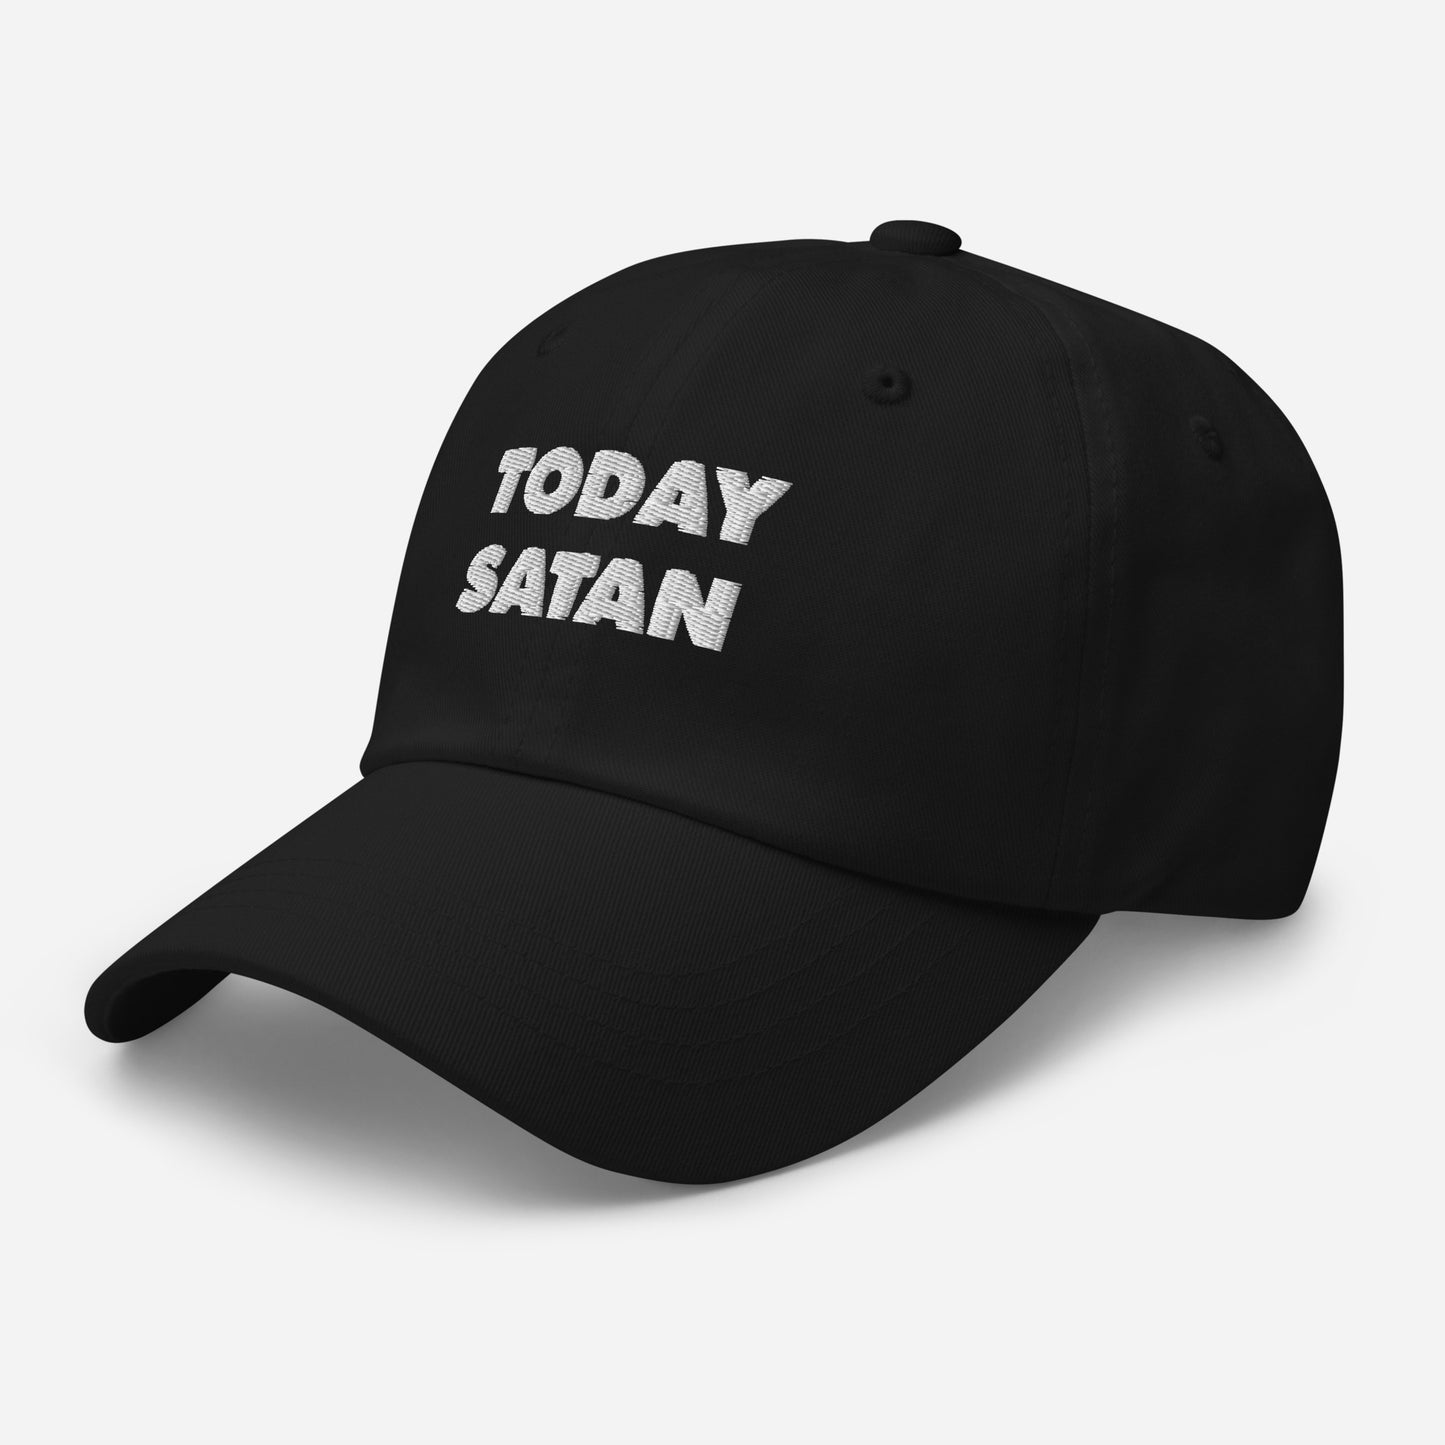 Today Satan Hat.